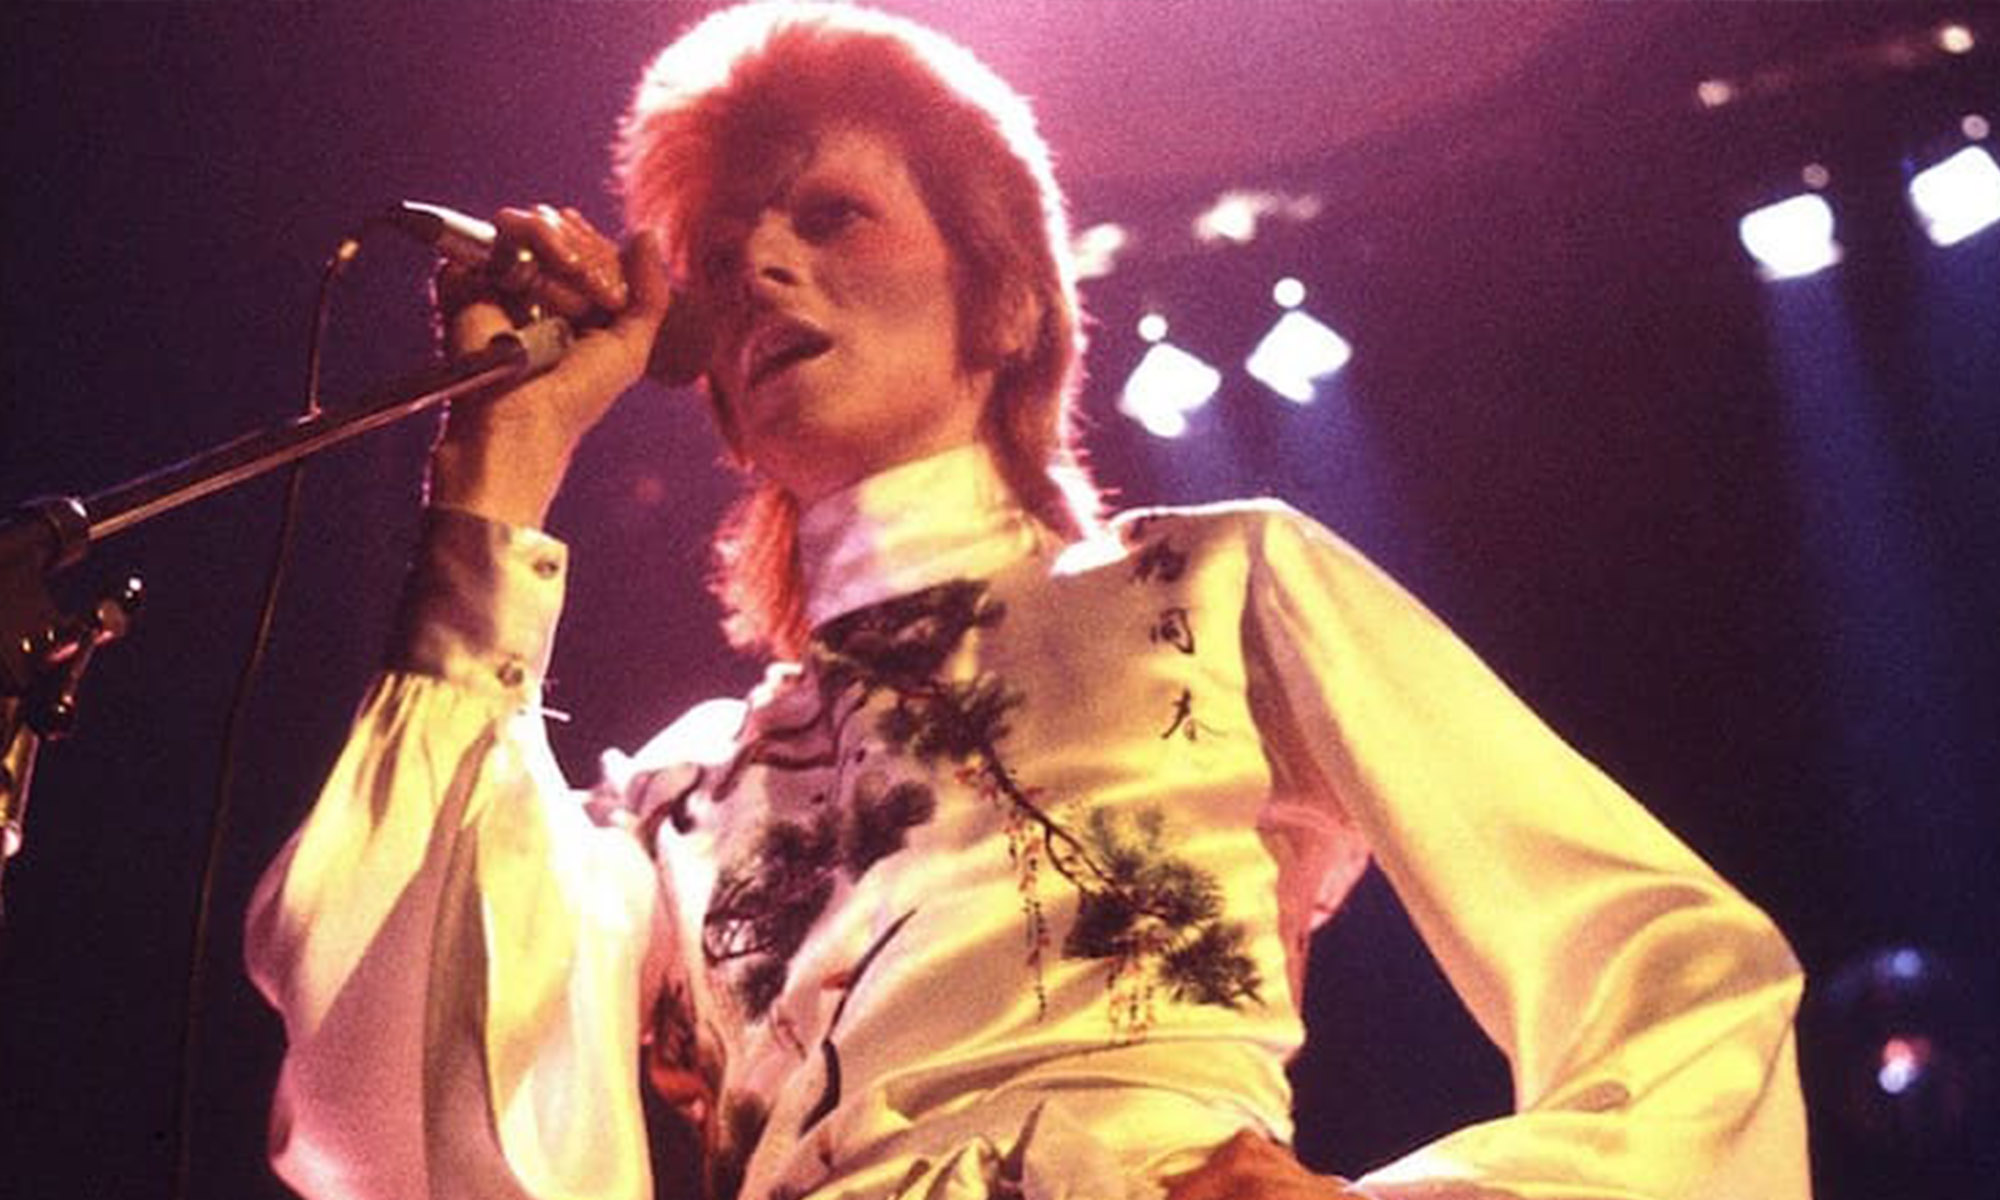 David Bowie at a concert